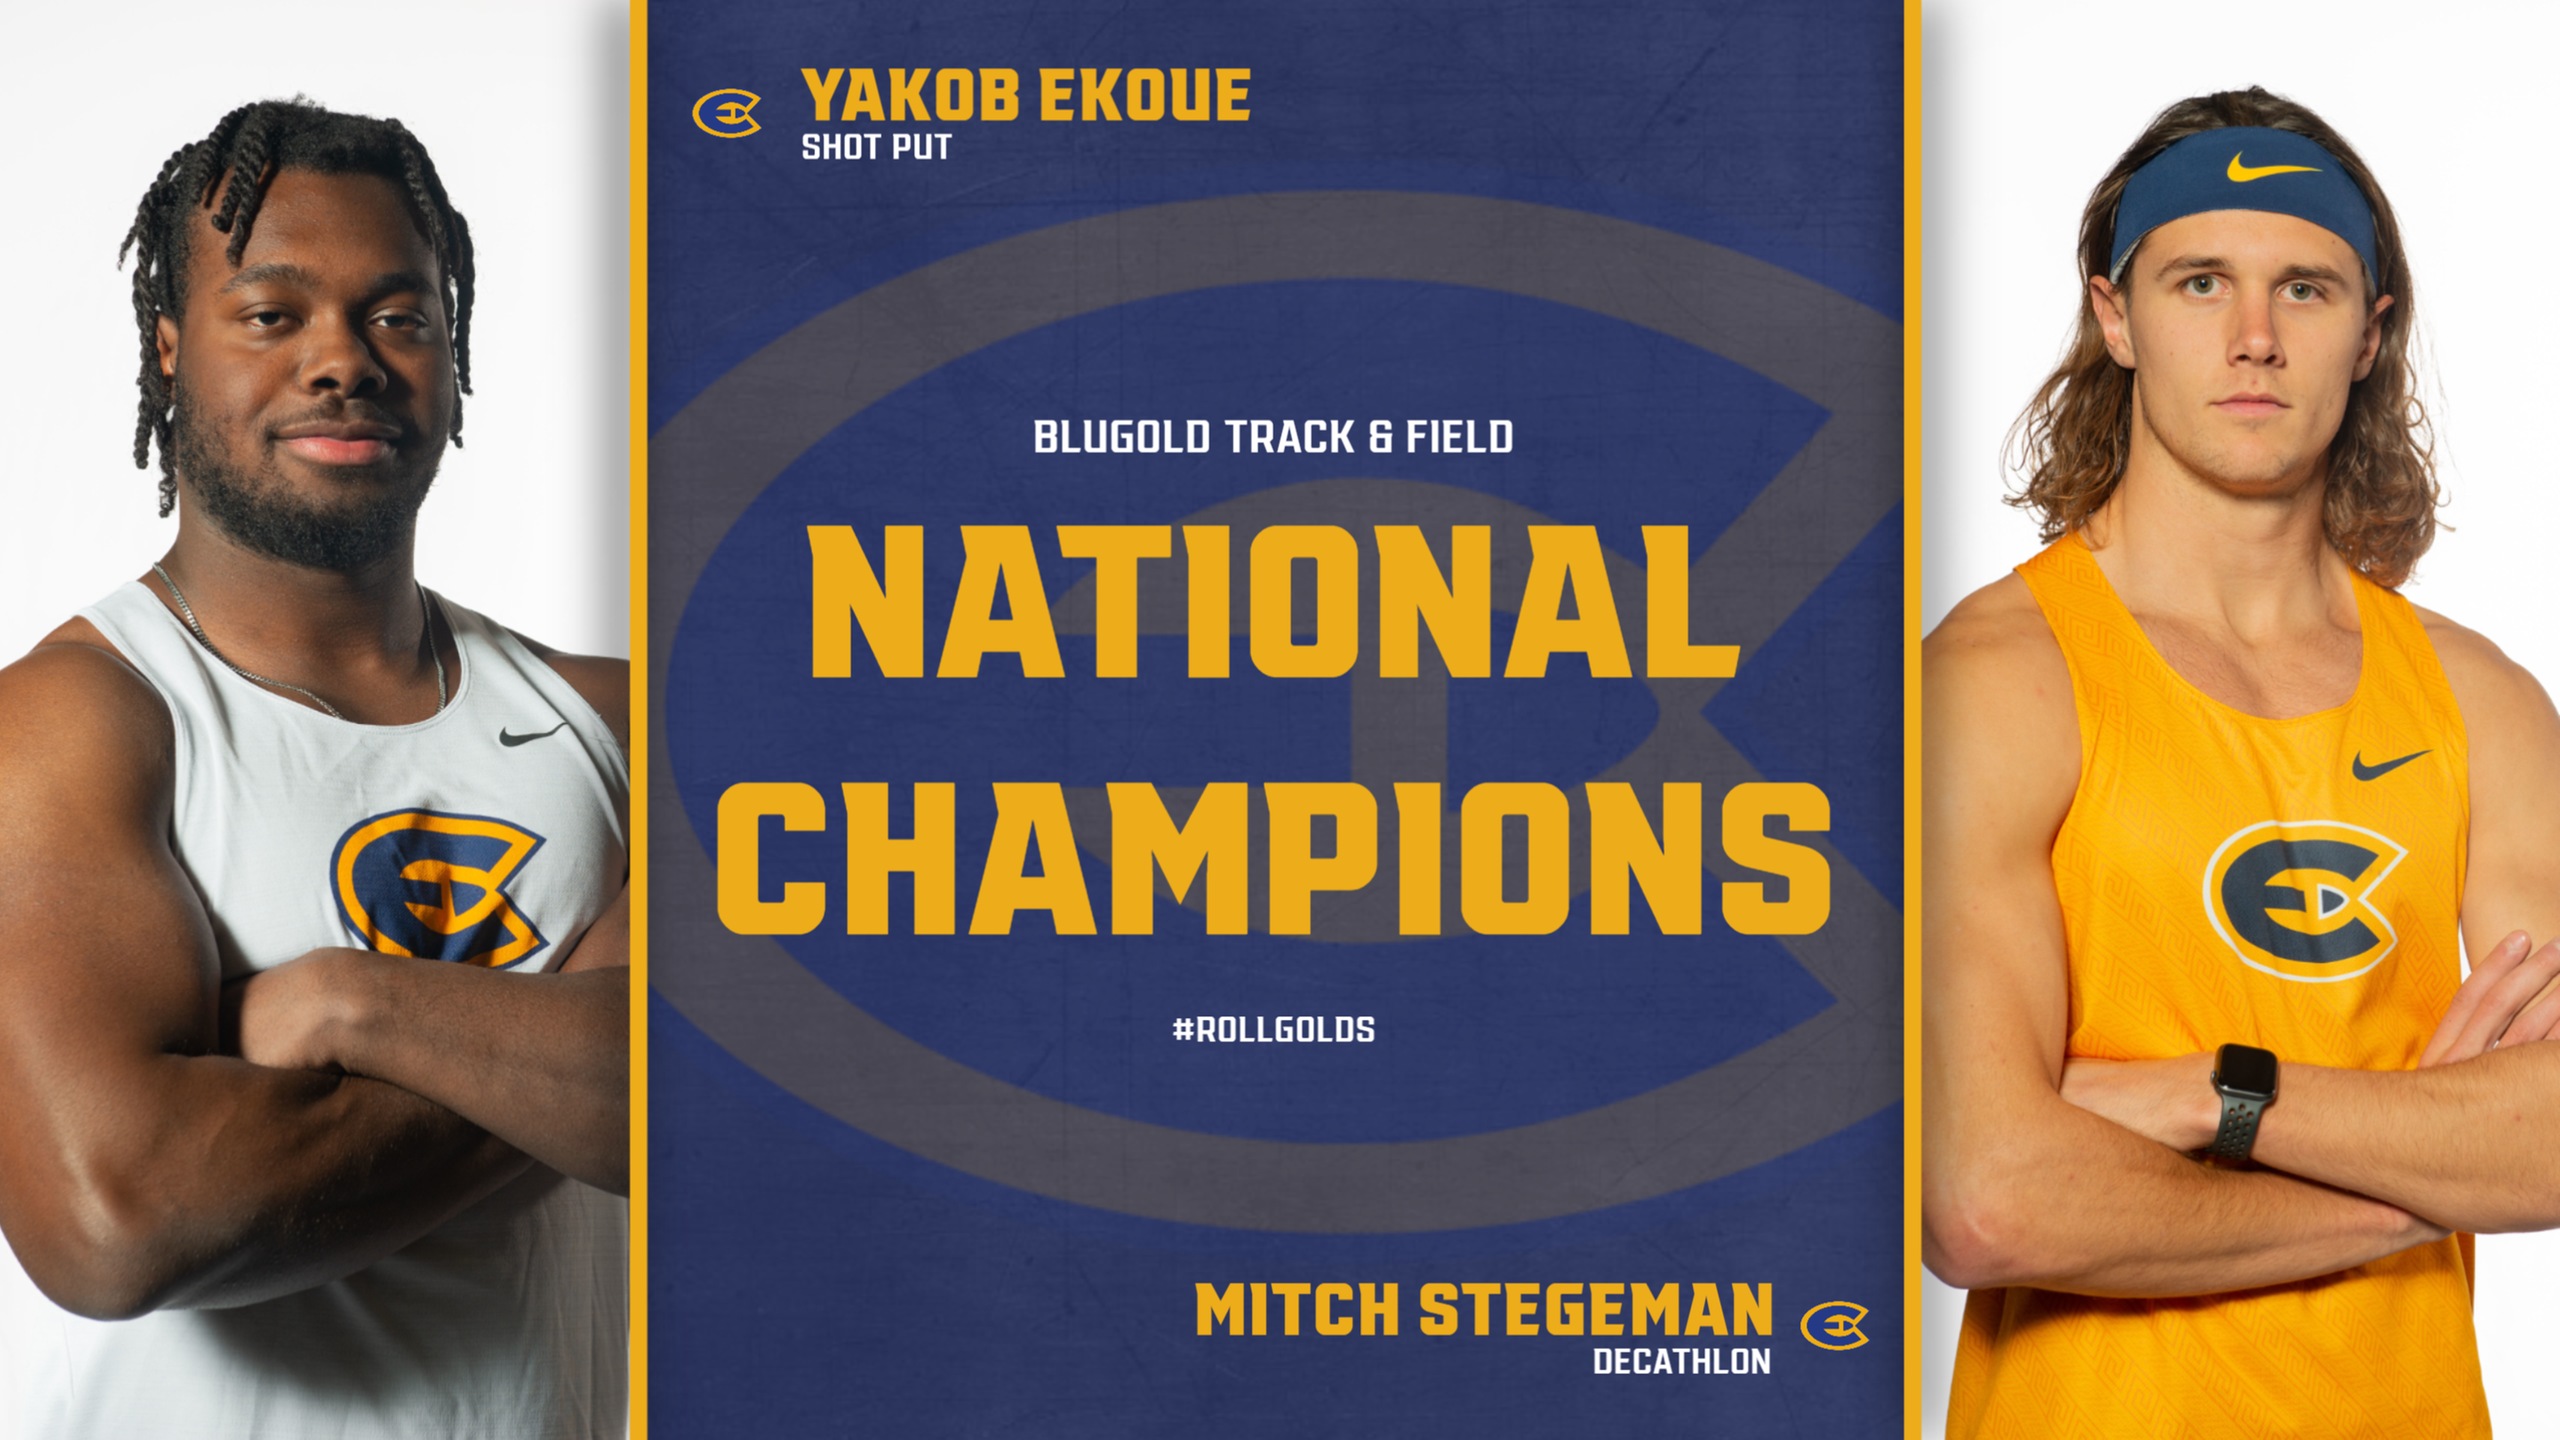 Ekoue, Stegeman win national titles for Blugolds